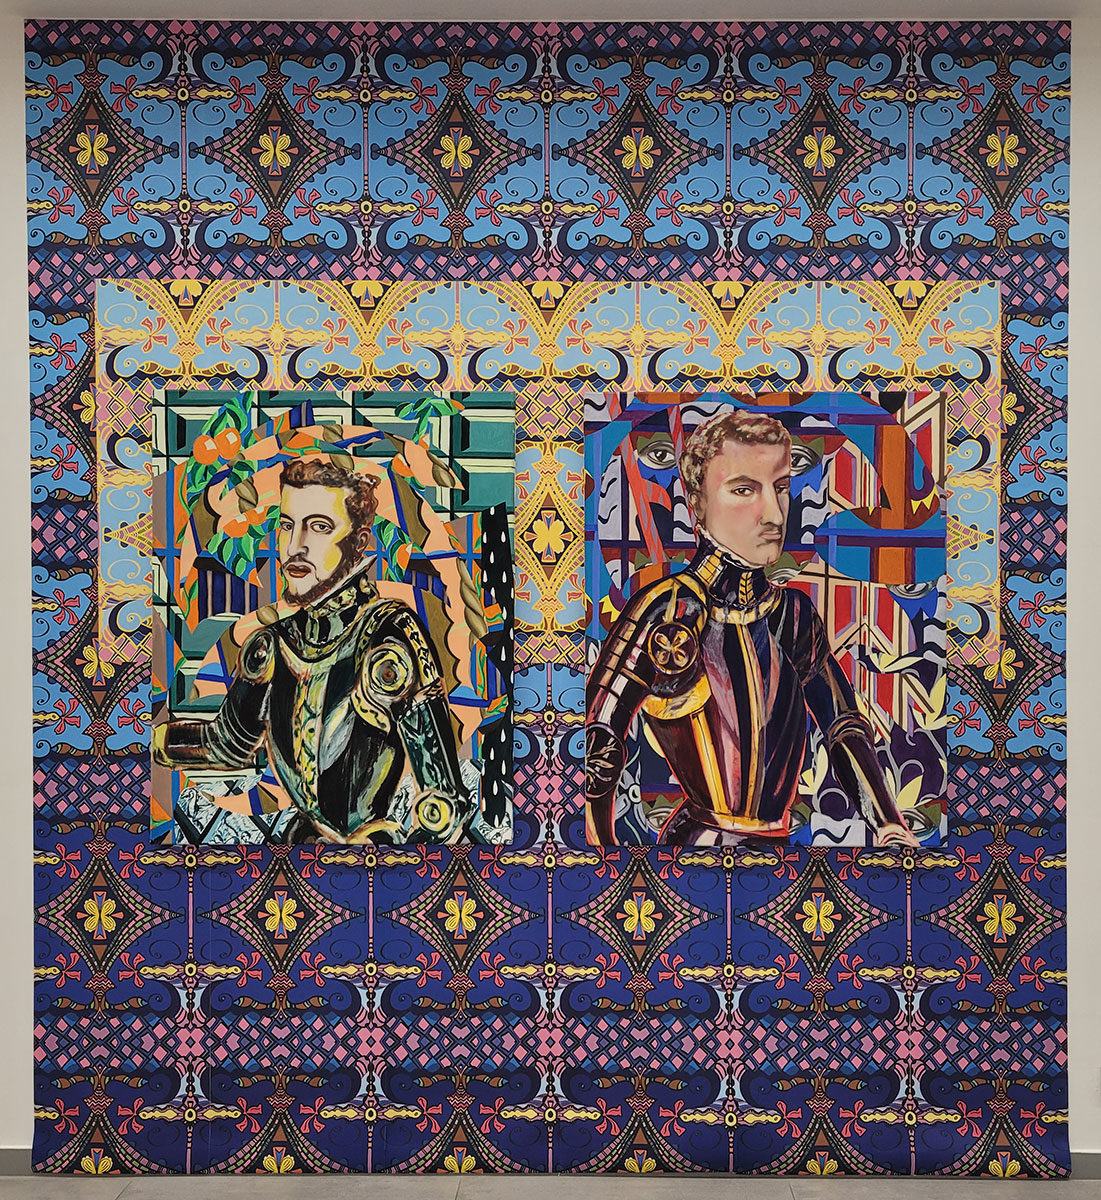 Christie van der Haak, Saray, wallpaper with History Pilip II and William of Orange